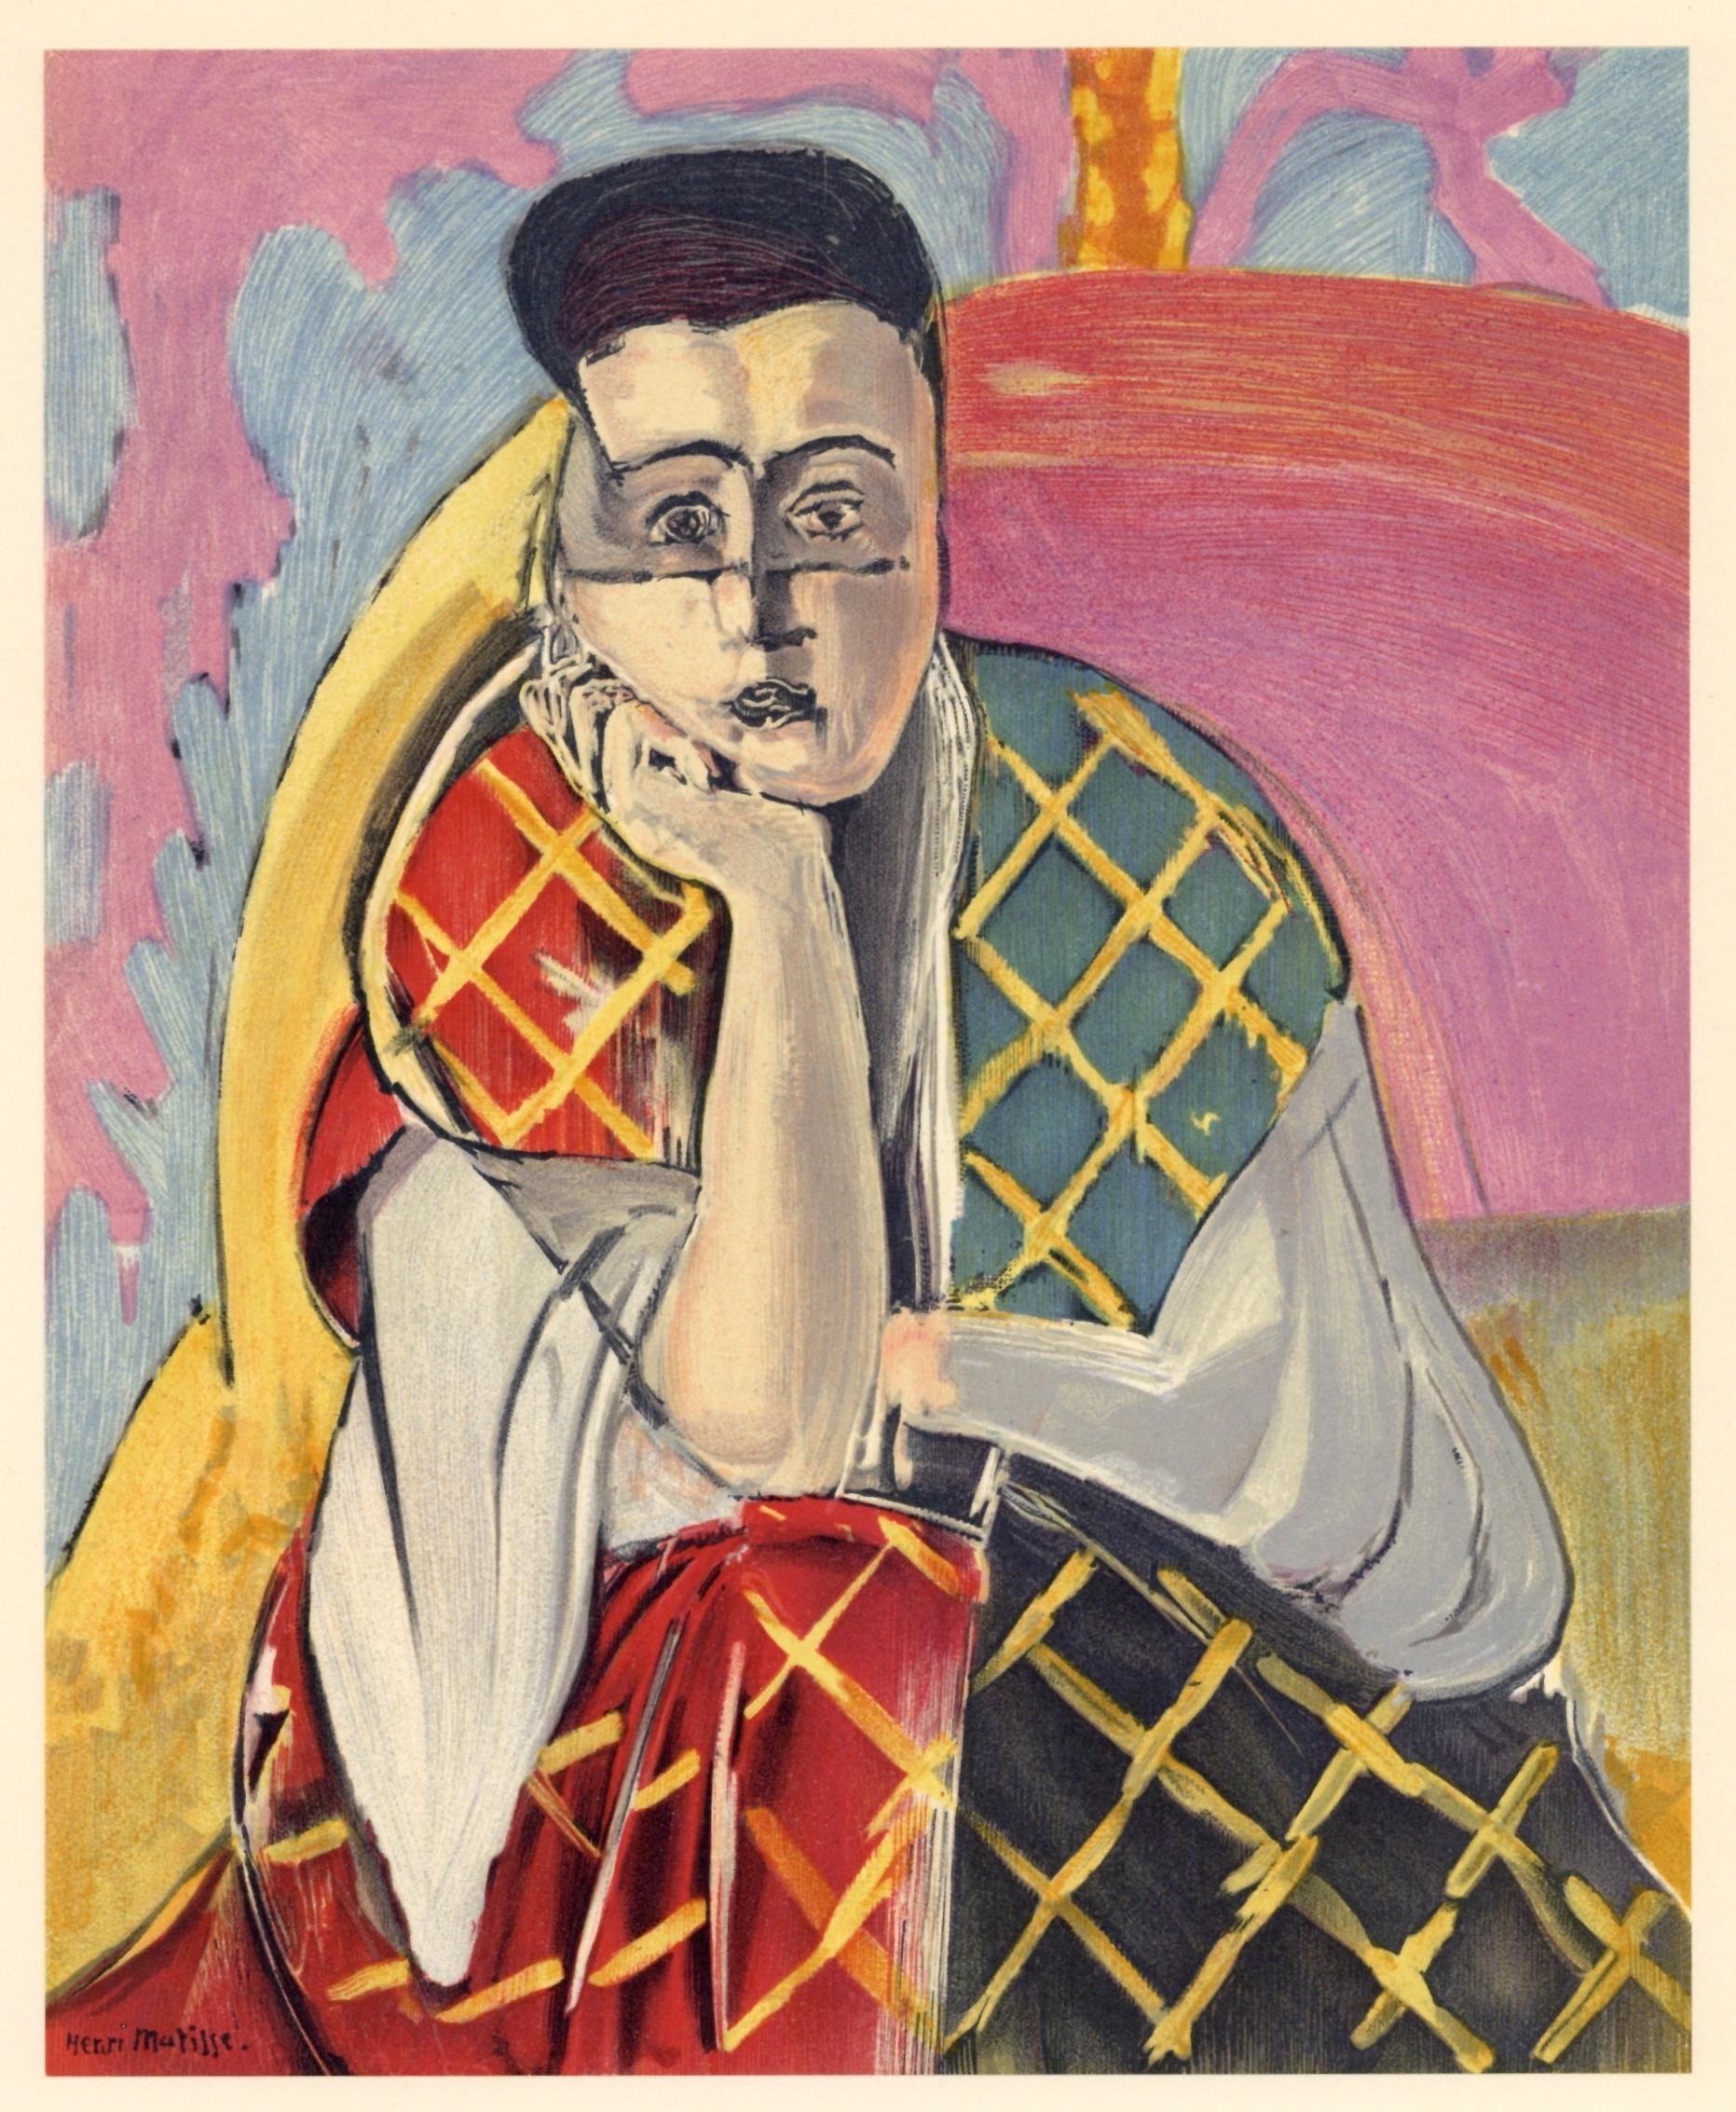 (after) Henri Matisse Portrait Print - "Woman with Veil" lithograph